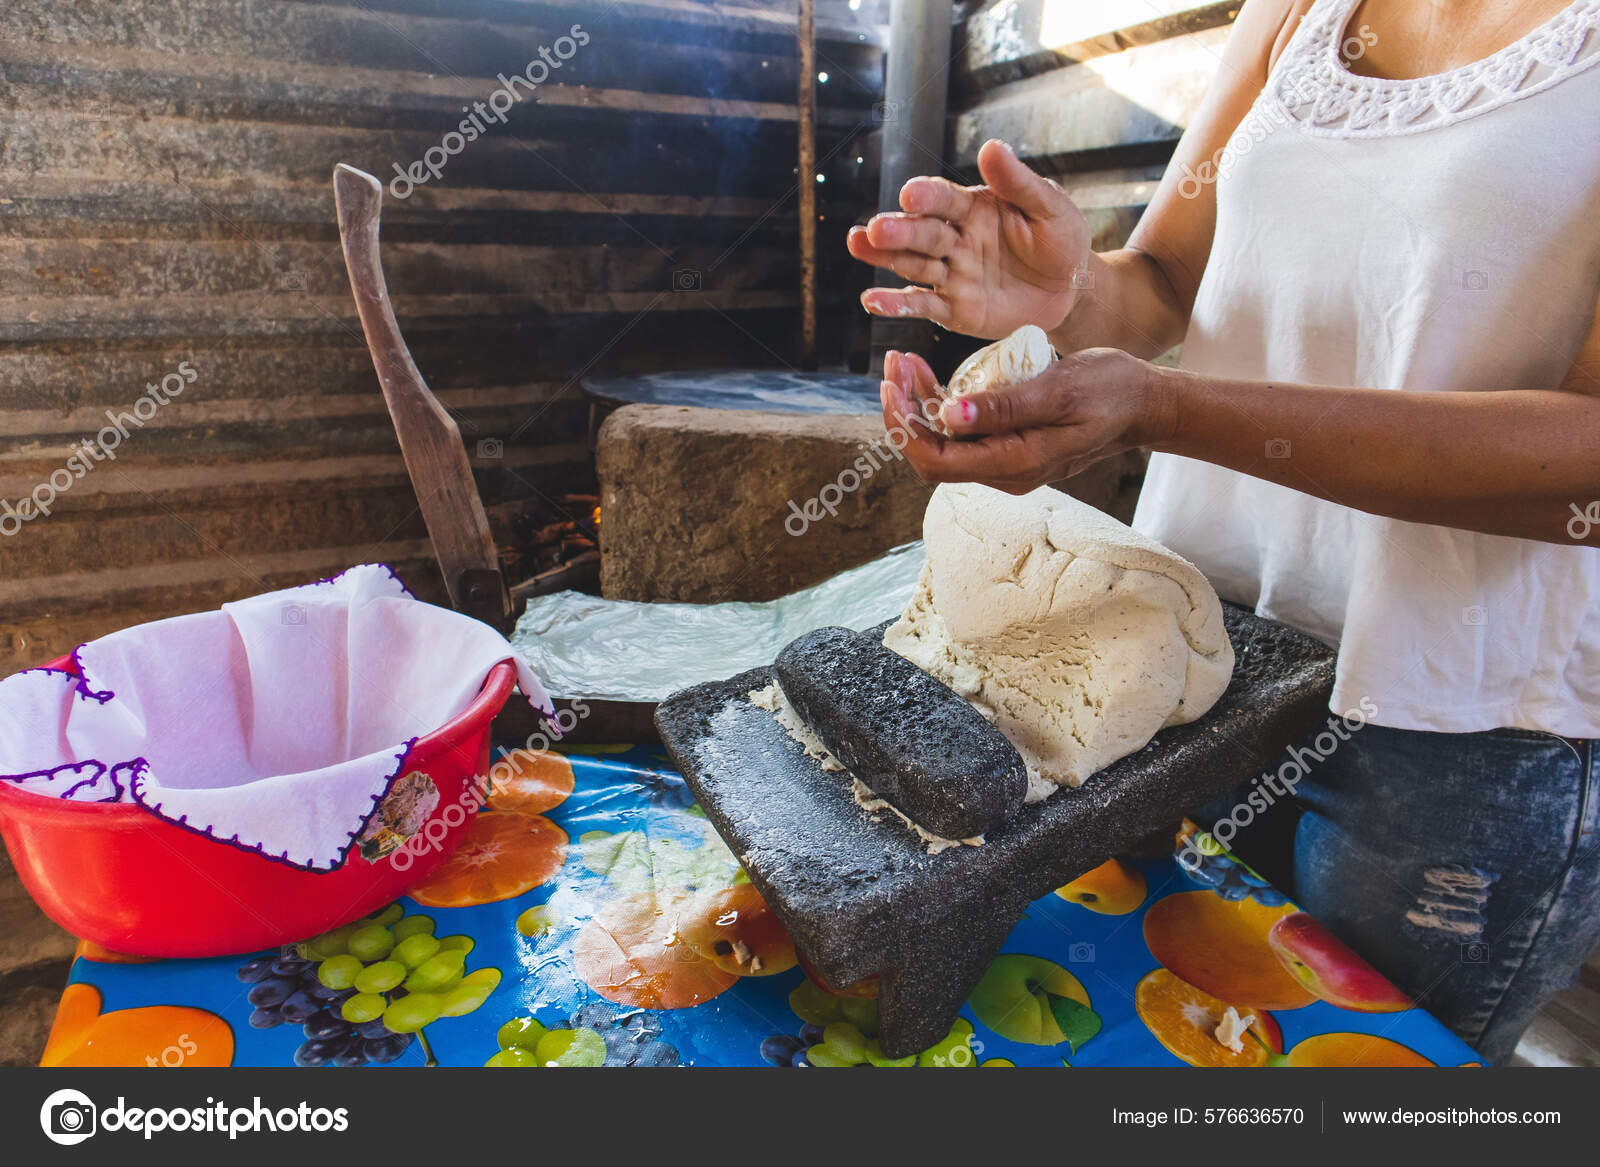 https://st.depositphotos.com/67903508/57663/i/1600/depositphotos_576636570-stock-photo-mexican-woman-torturing-corn-mace.jpg